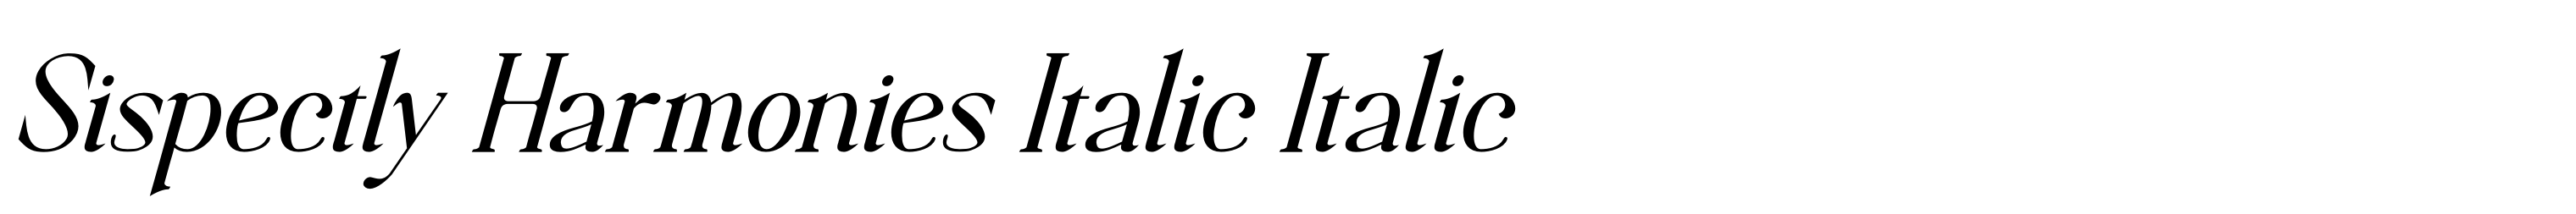 Sispectly Harmonies Italic Italic